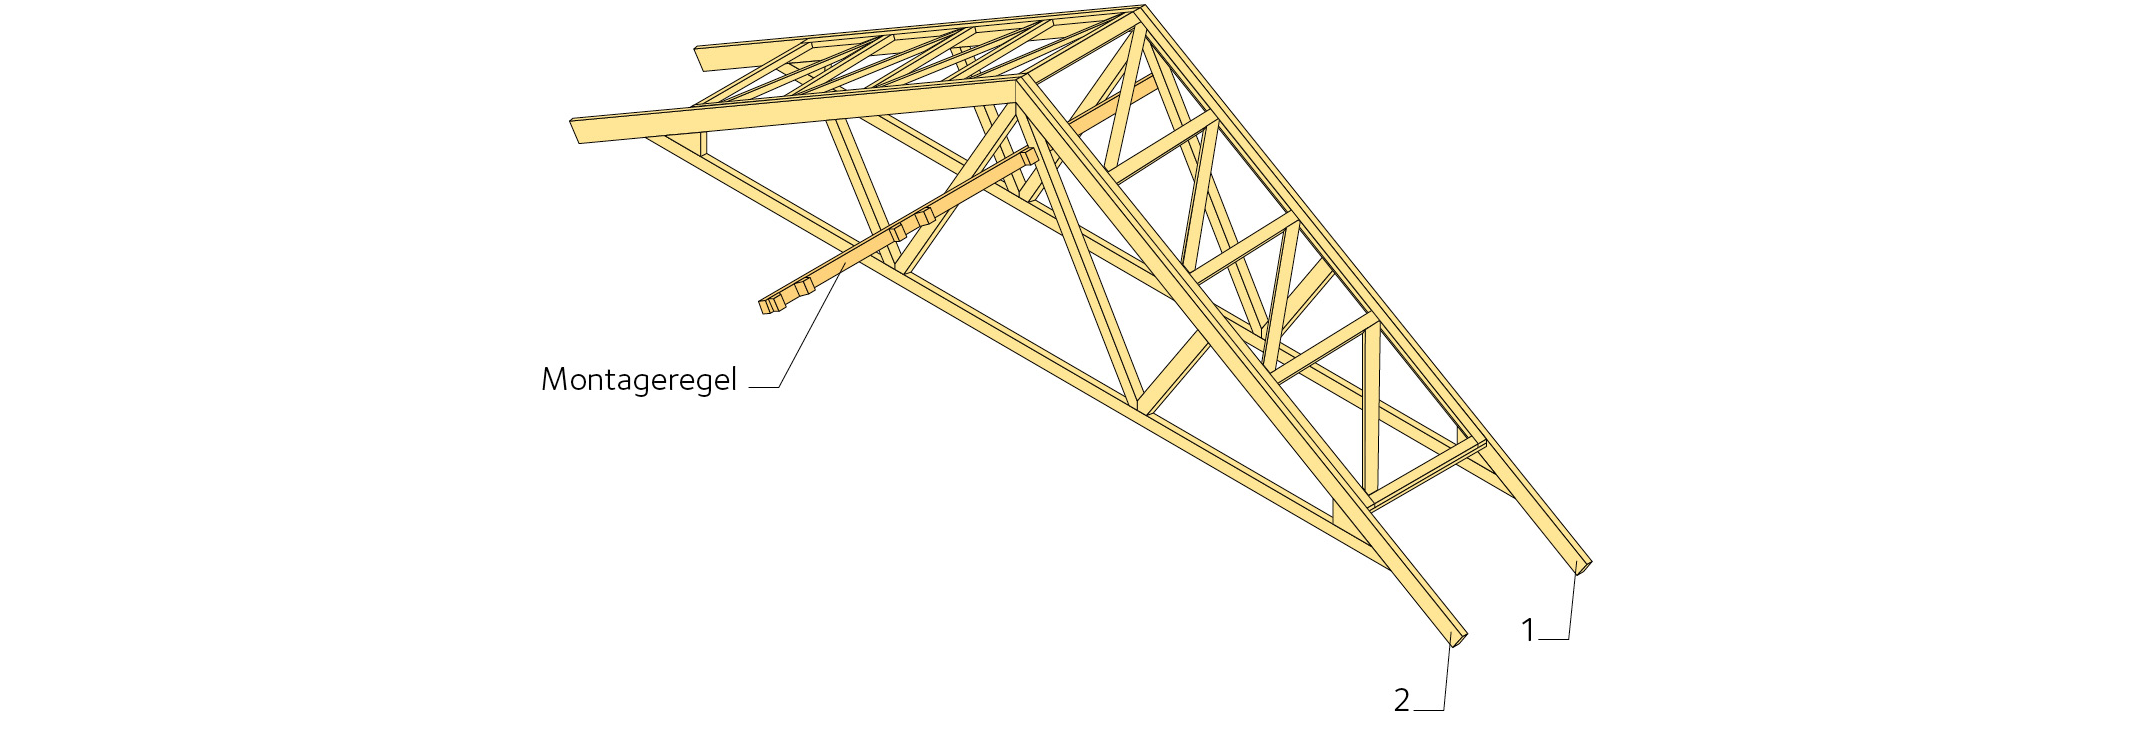 Figur 3.22 Stabil takstolsstruktur med montageregel.